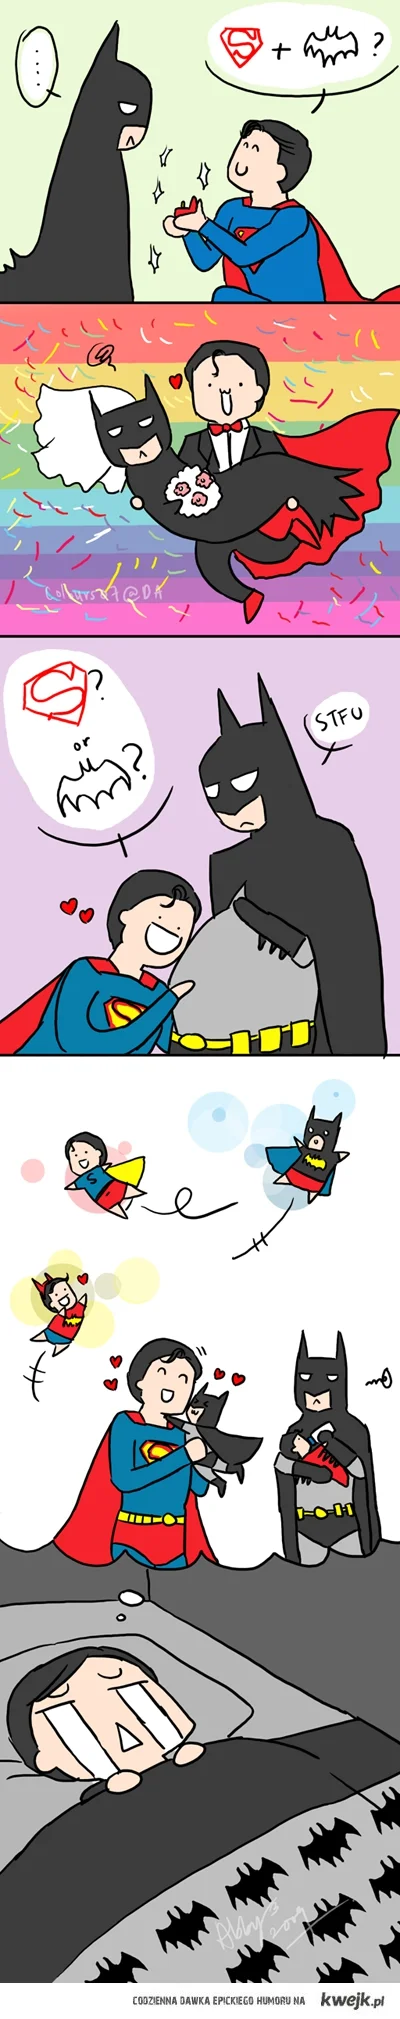 mistrz_tekkena - #batman #superman #komiks